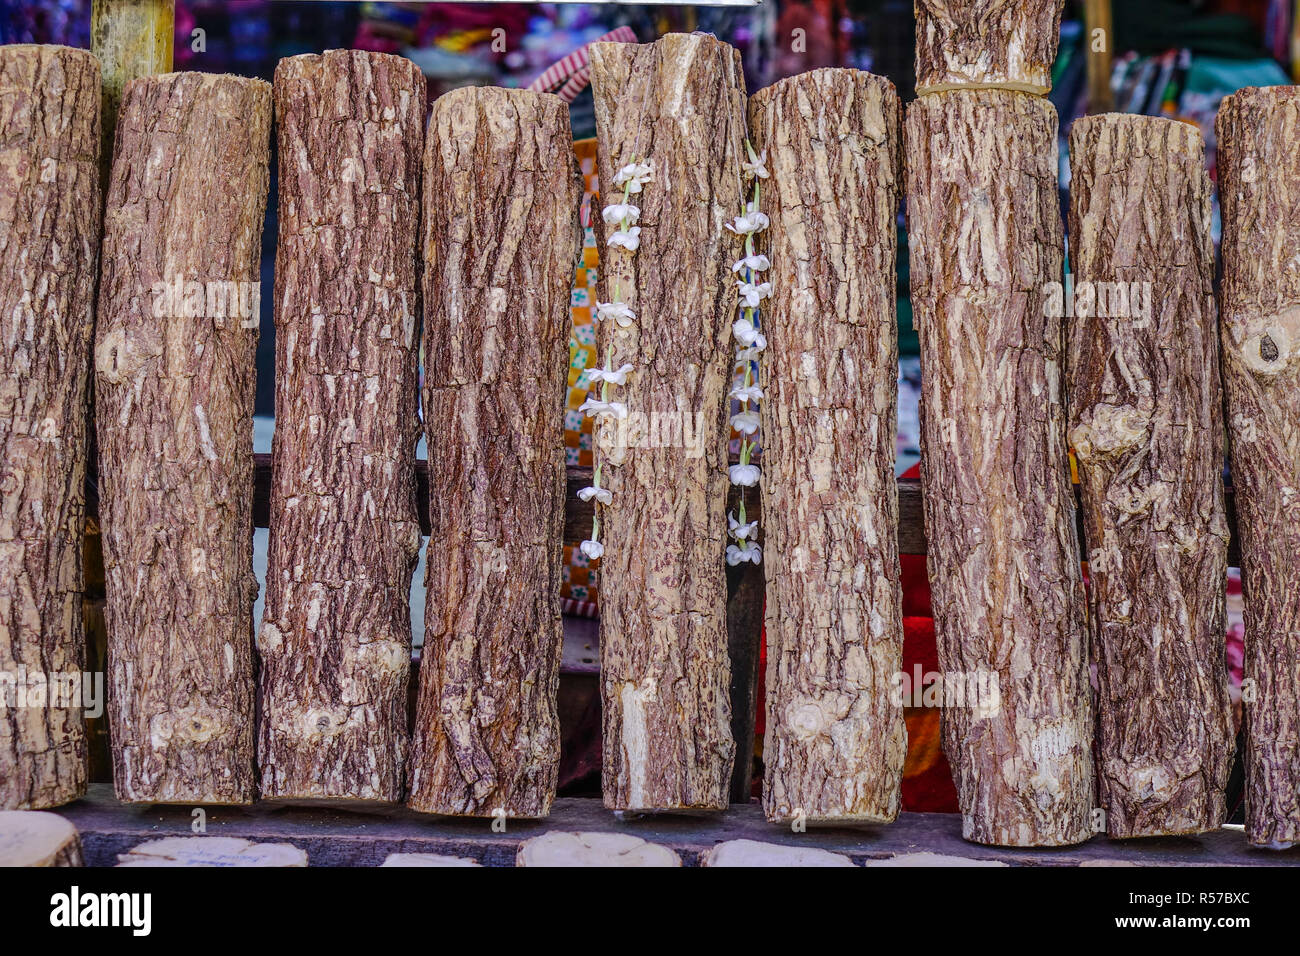 Thanaka wood for sale at rural market. Tanaka is Burmese tradition cosmetic made from bark of tanaka tree. Stock Photo